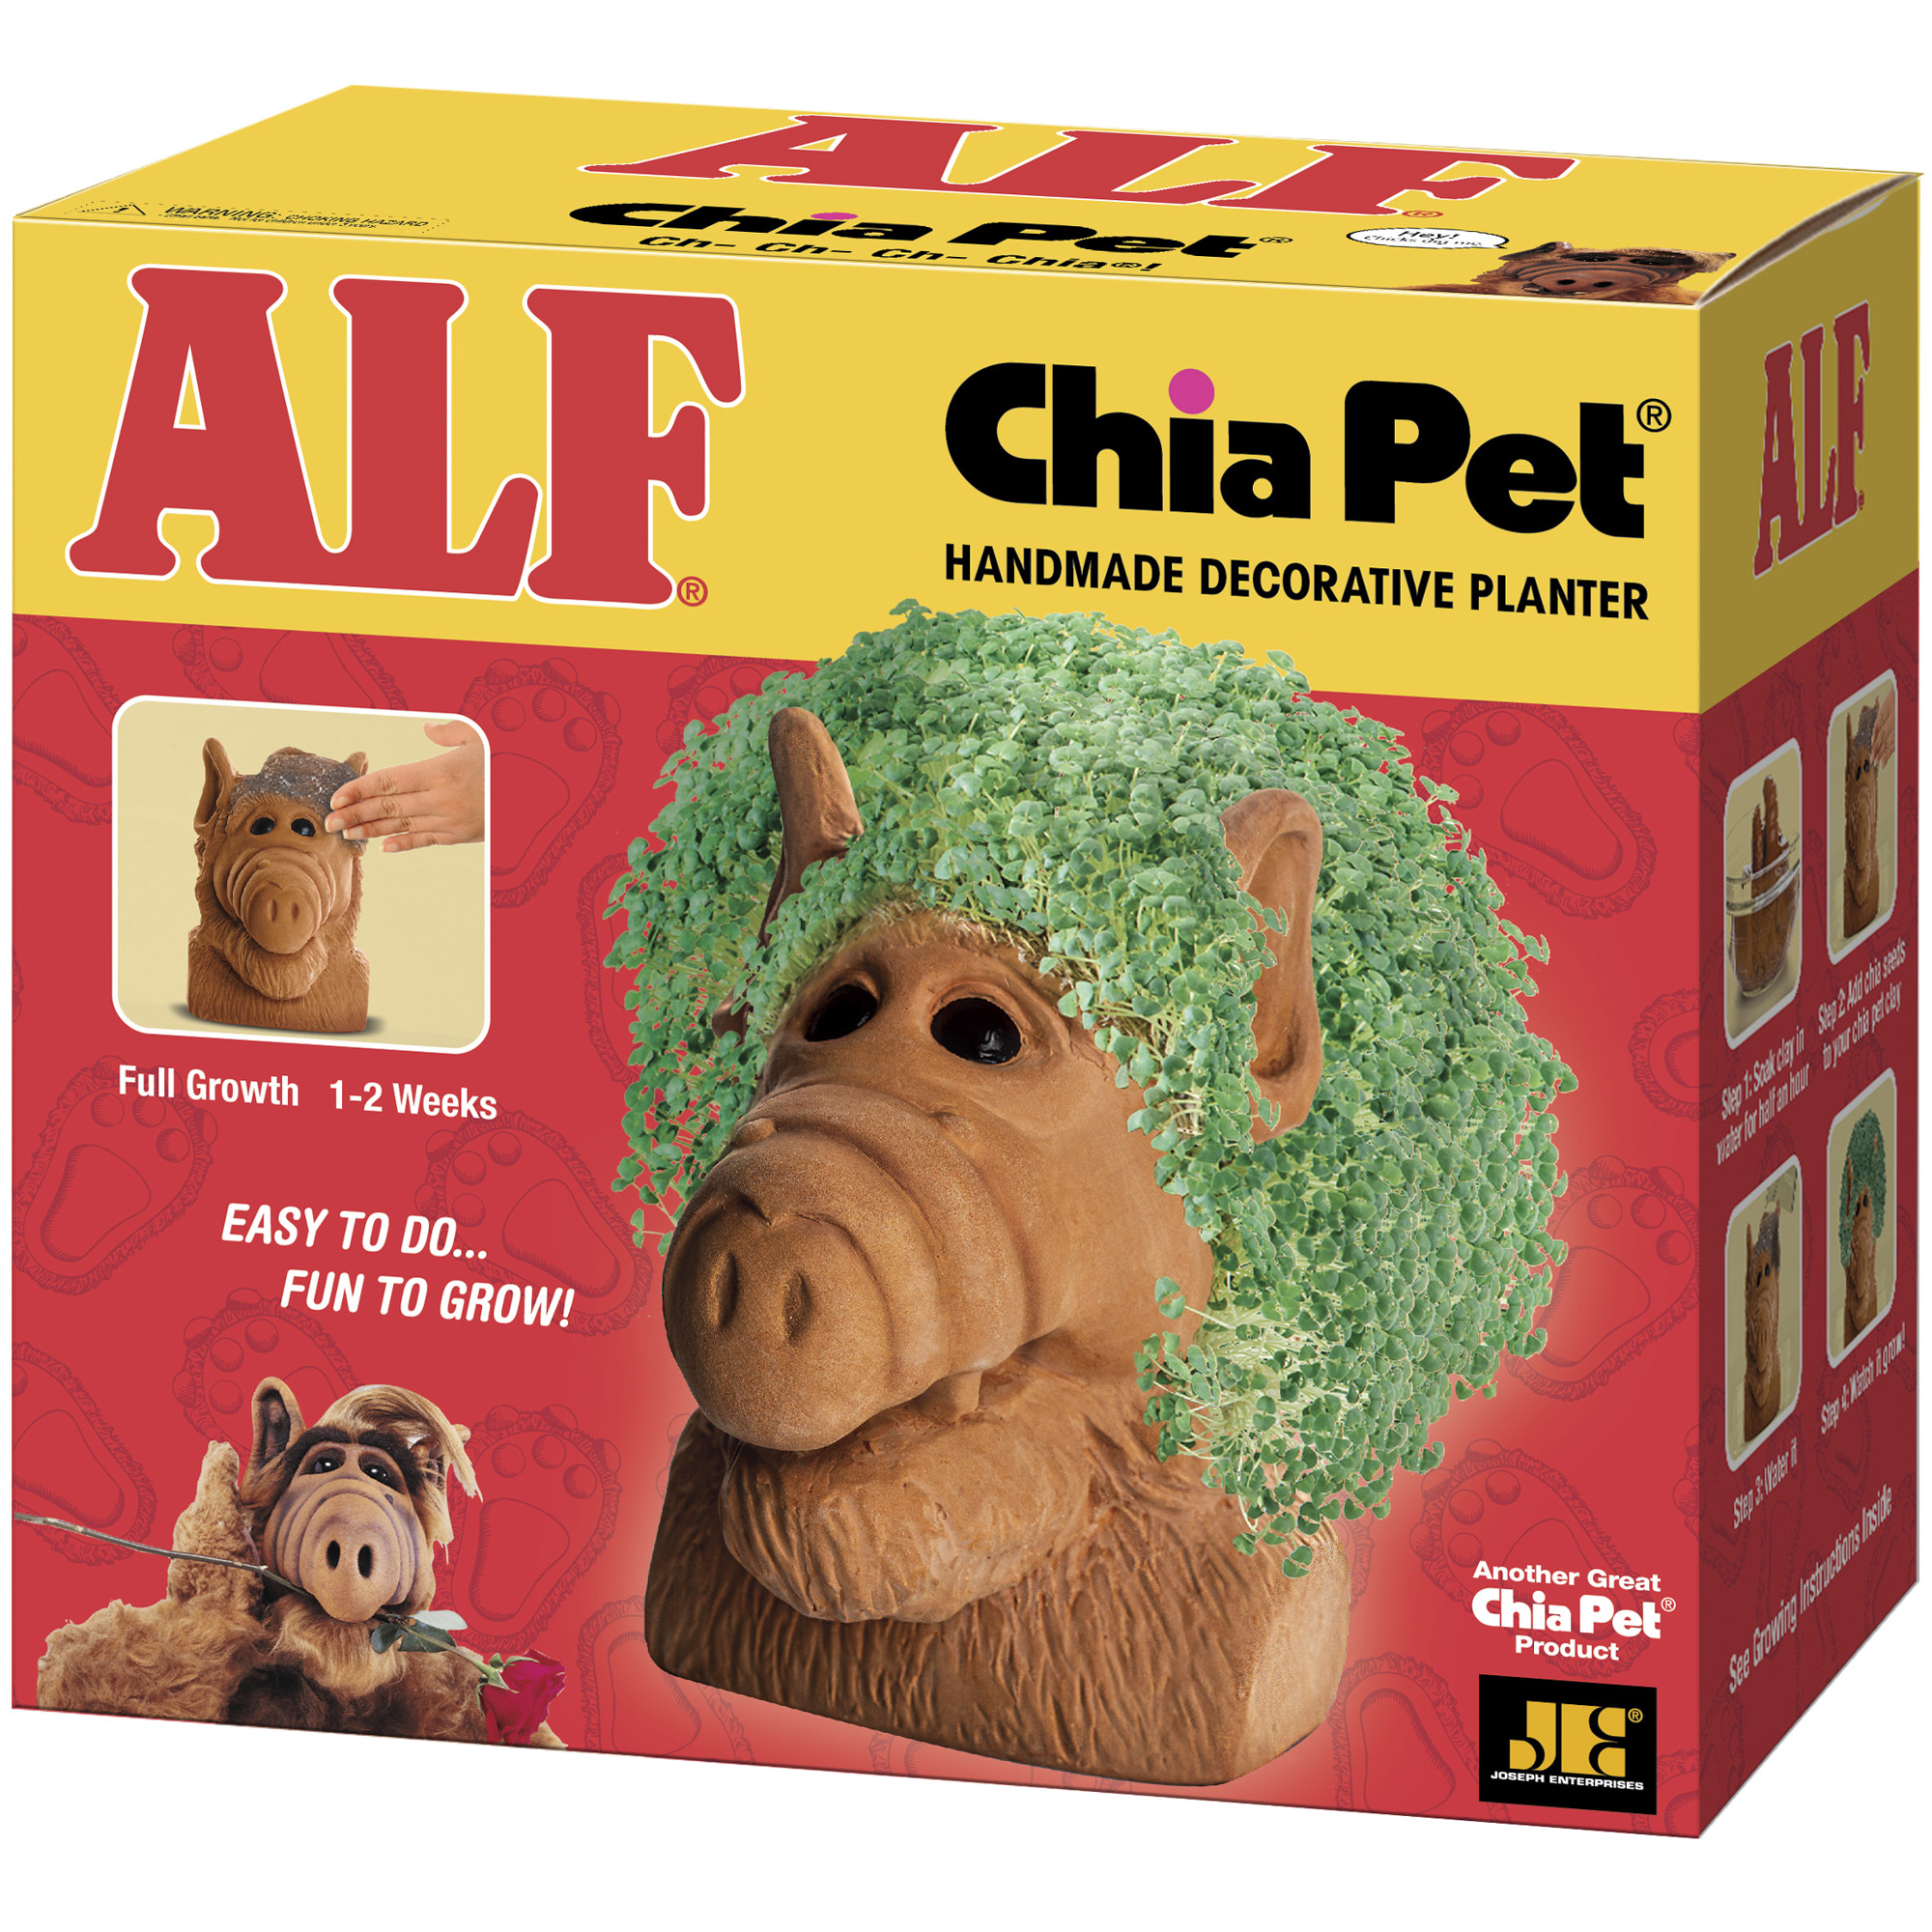 Chia Pet - Alf - Decorative Planter - image 1 of 5